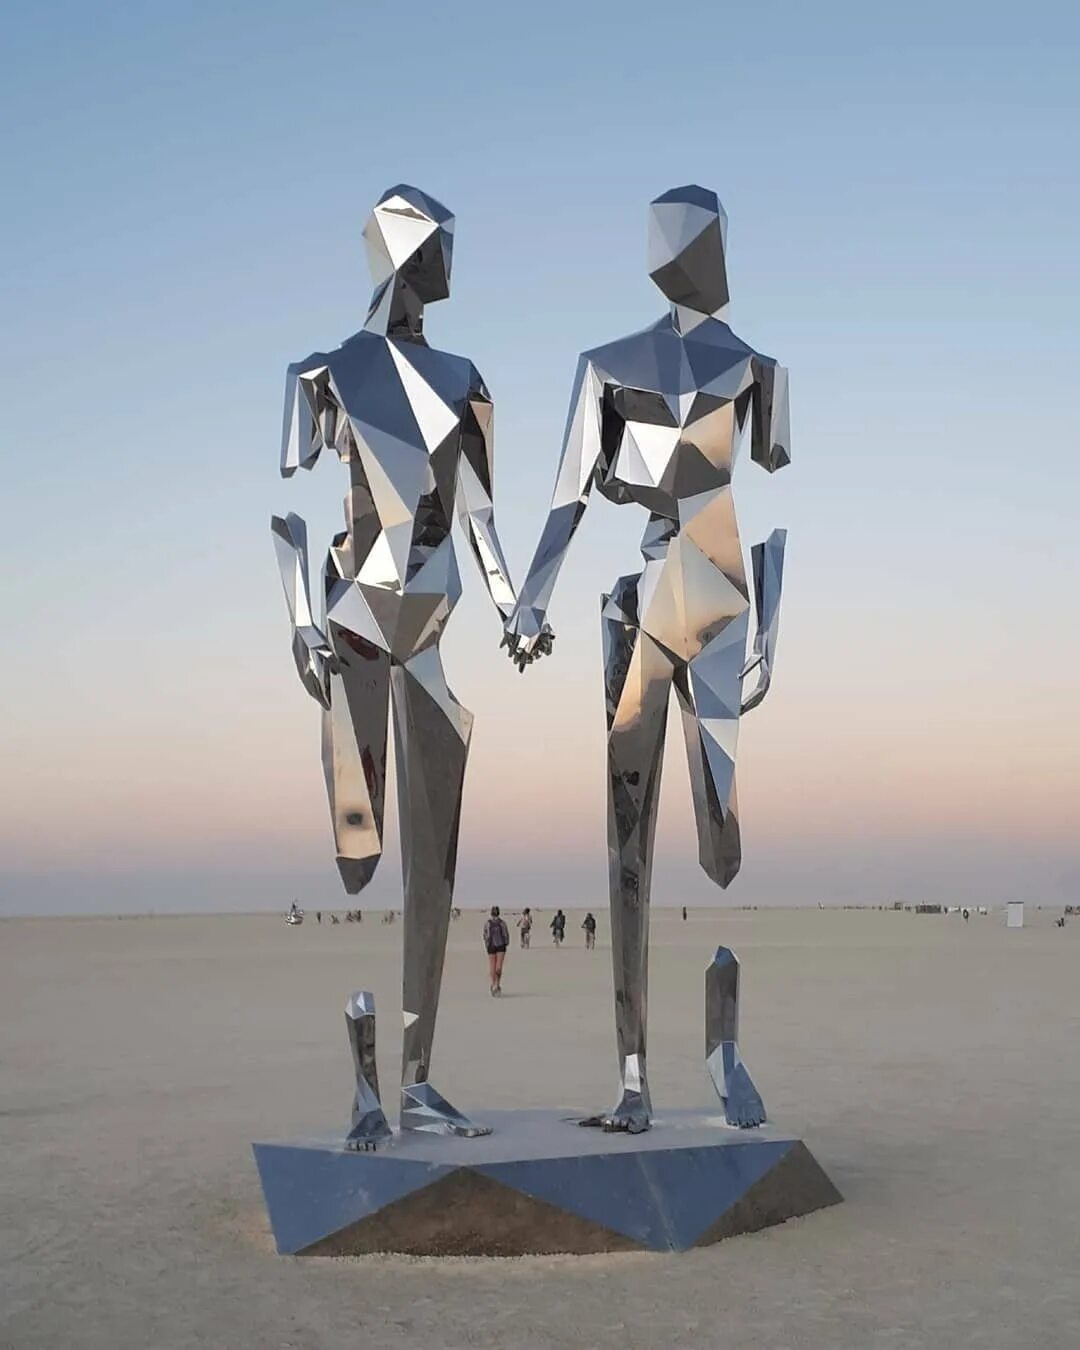 Бёрнинг Мэн статуя. Скульптура Бернинг Мэн любовь. Статуя Бернинг Мэн 2022. Фестиваль Burning man статуи. Мир фигур 63 глава